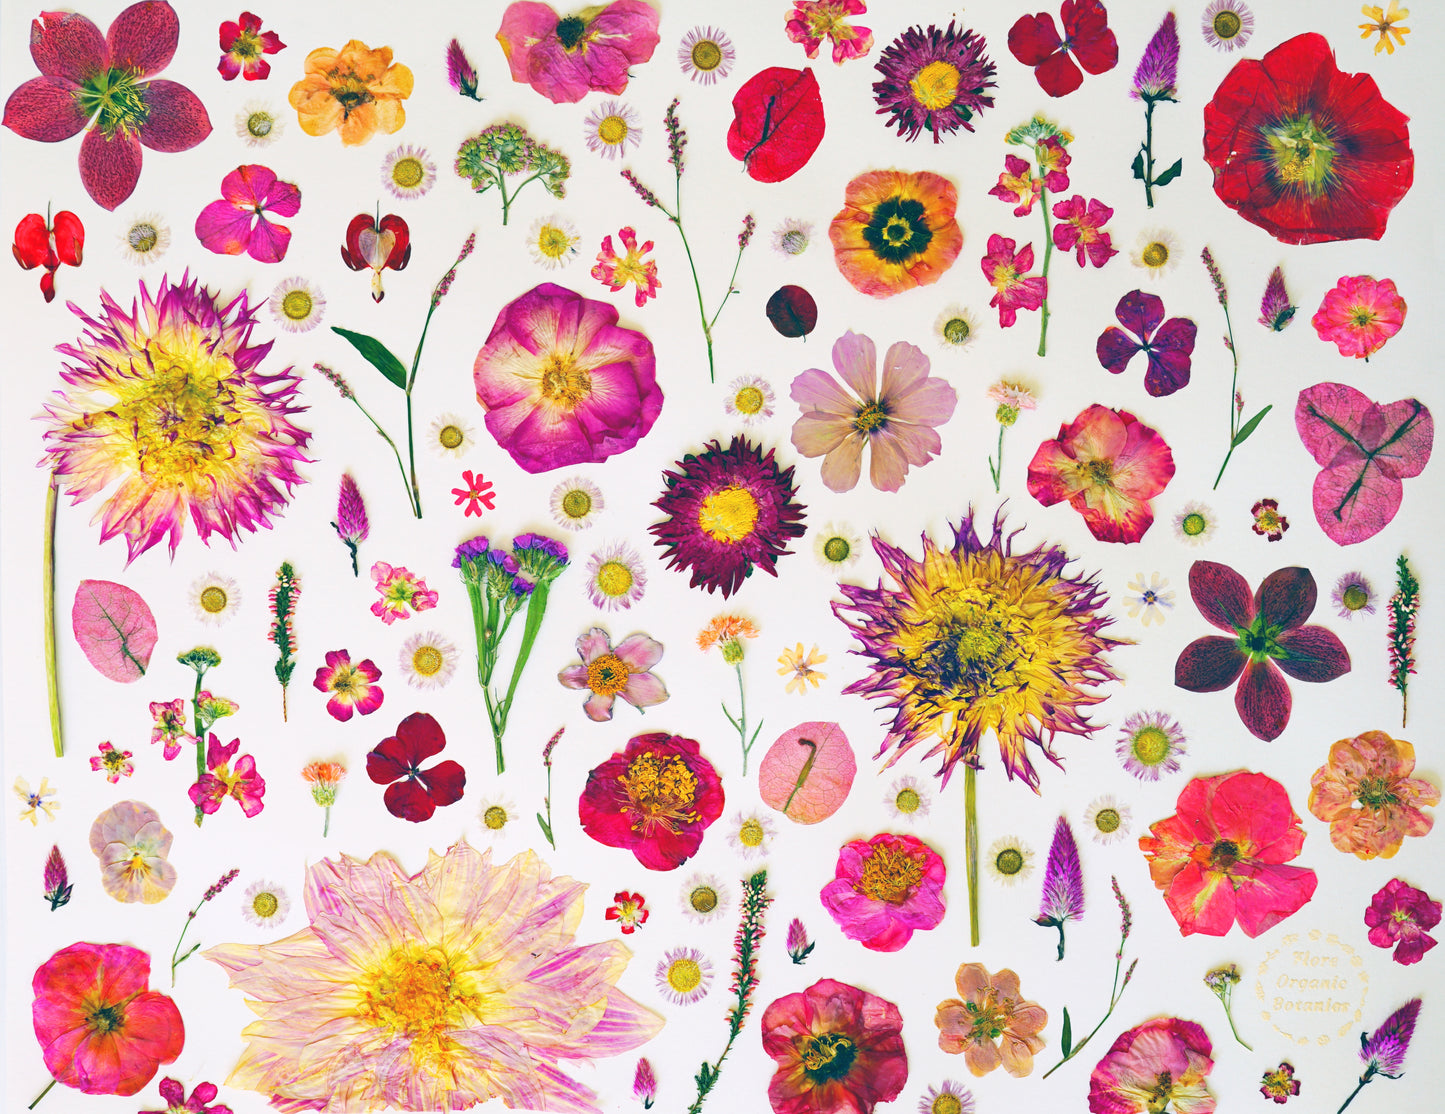 "La Vie en Rose" Botanical Art Collage